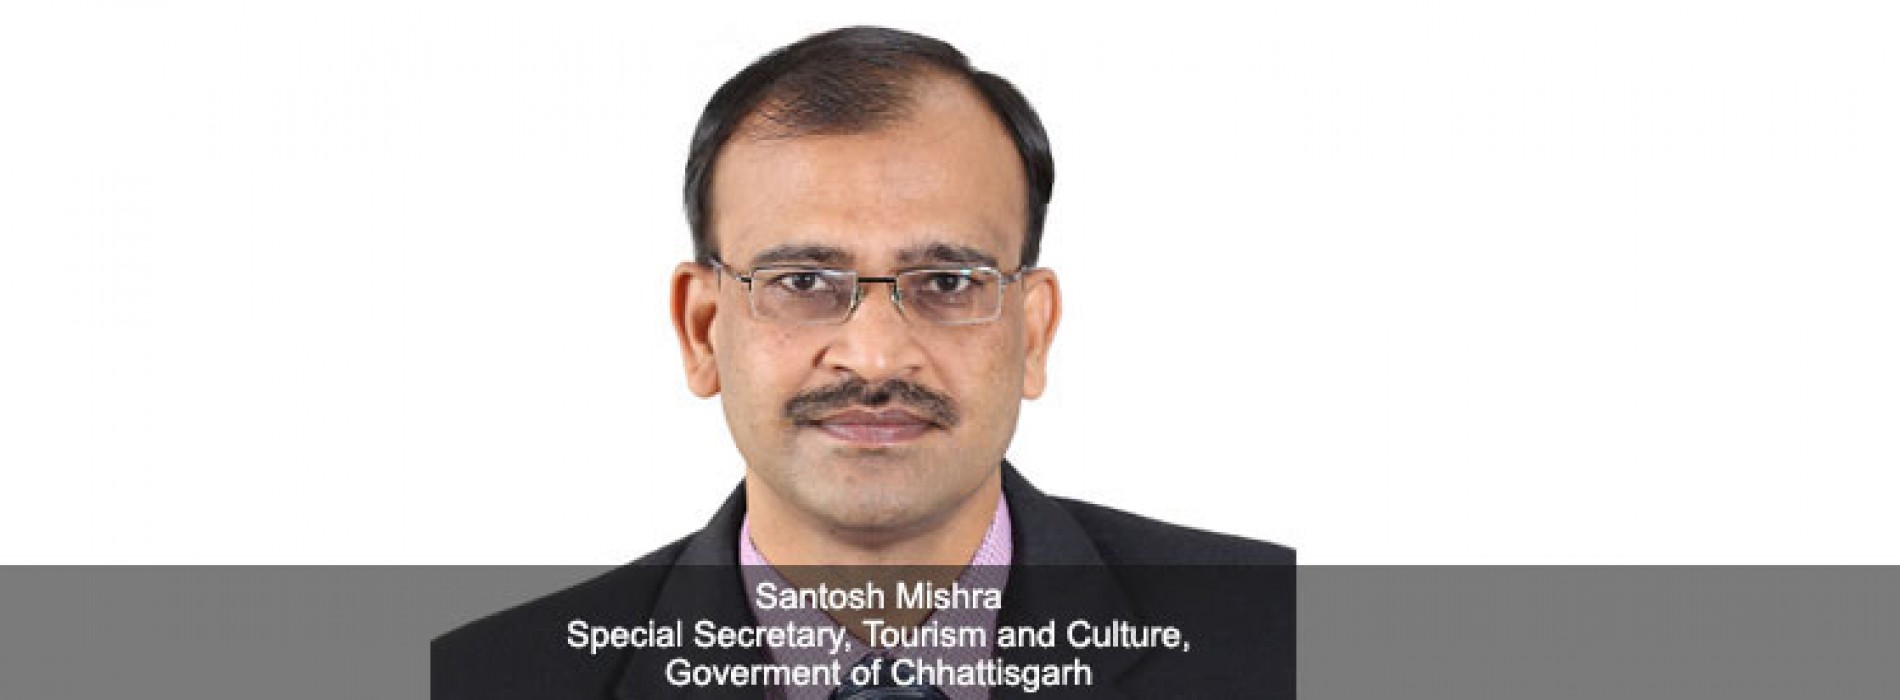 Chhattisgarh Tourism kicks off unique, niche tourism products